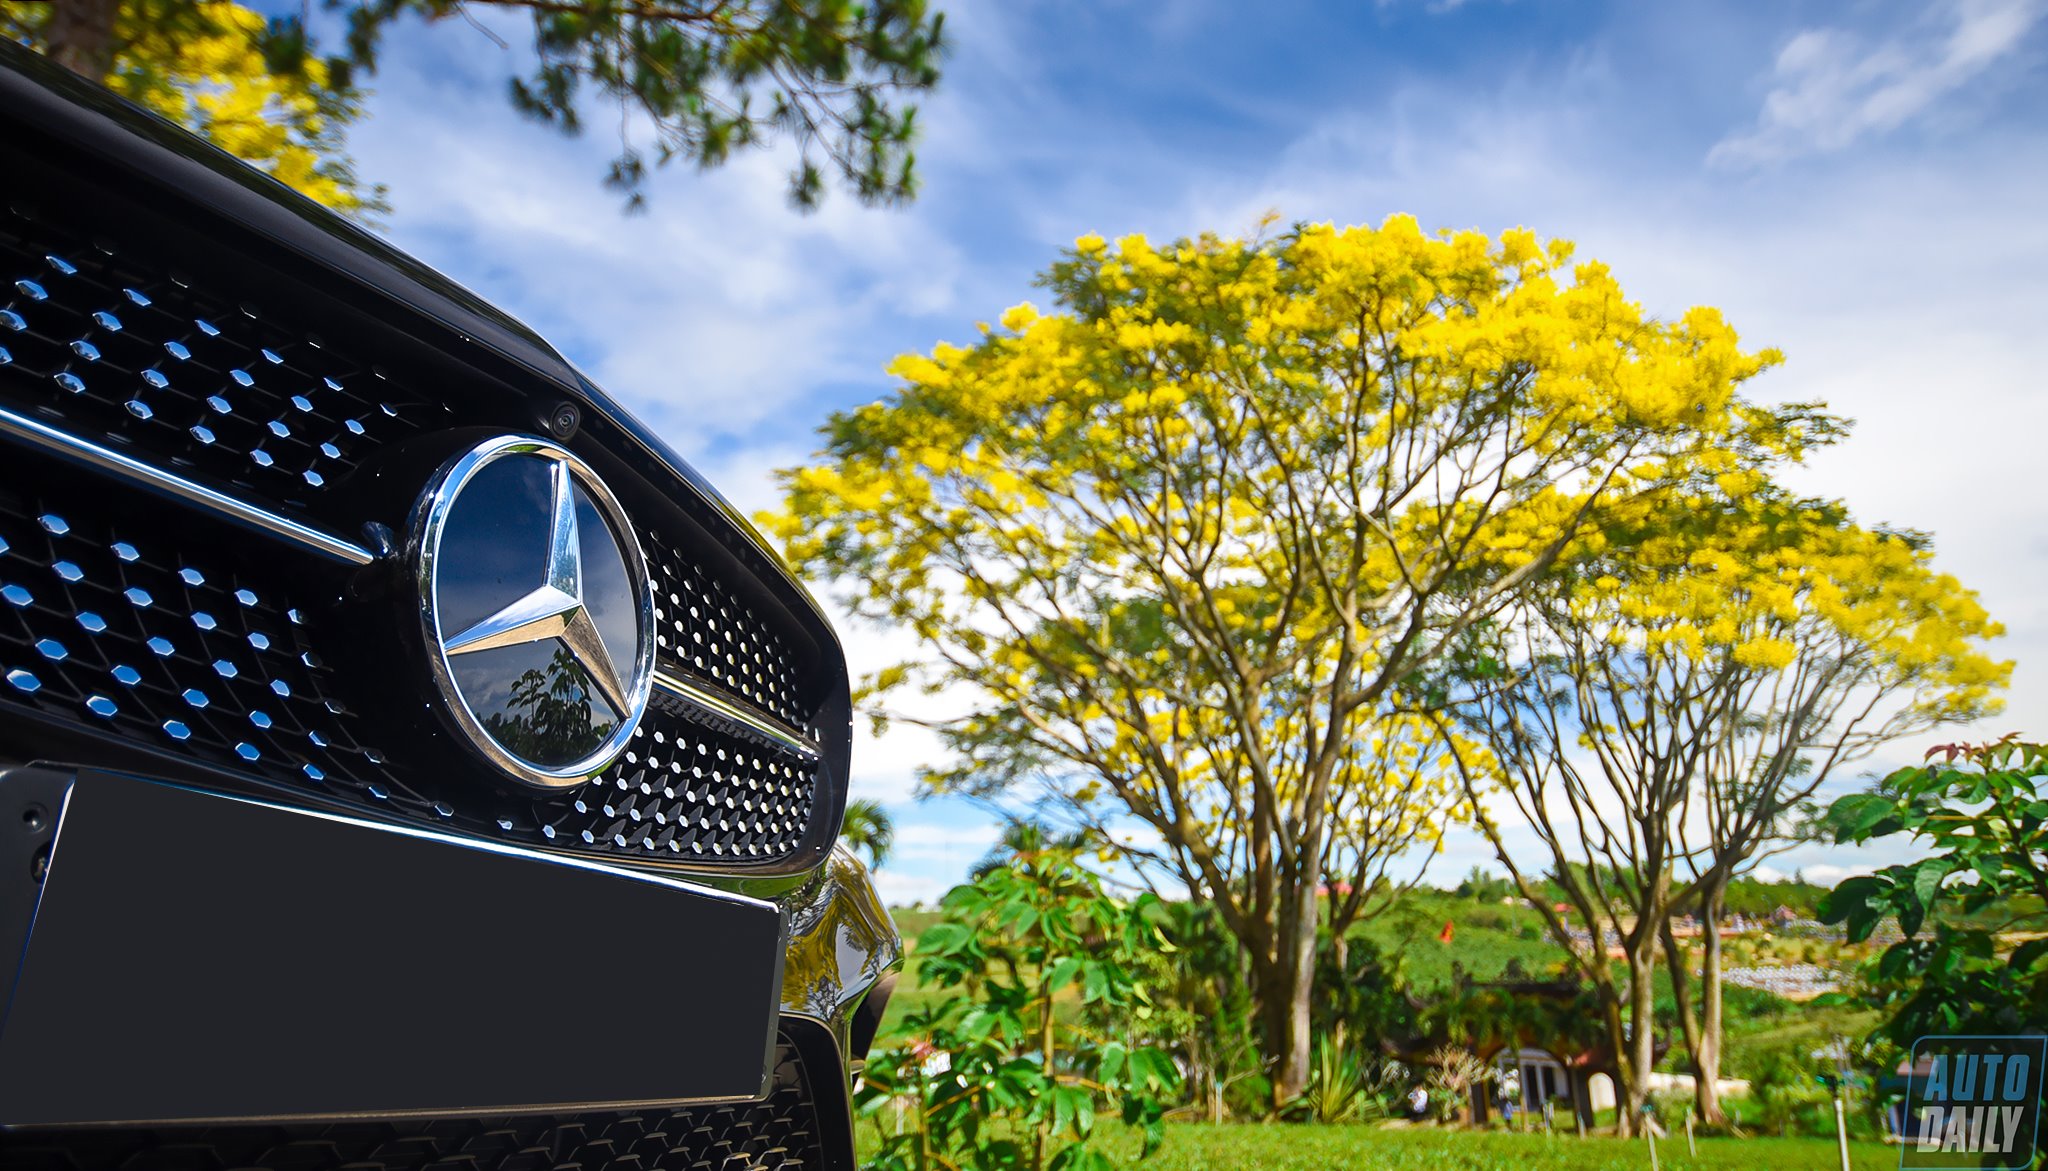 Mercedes-Heritage Photo Tour 2020: Du khảo giữa mùa hoa lim-xet-1.jpg